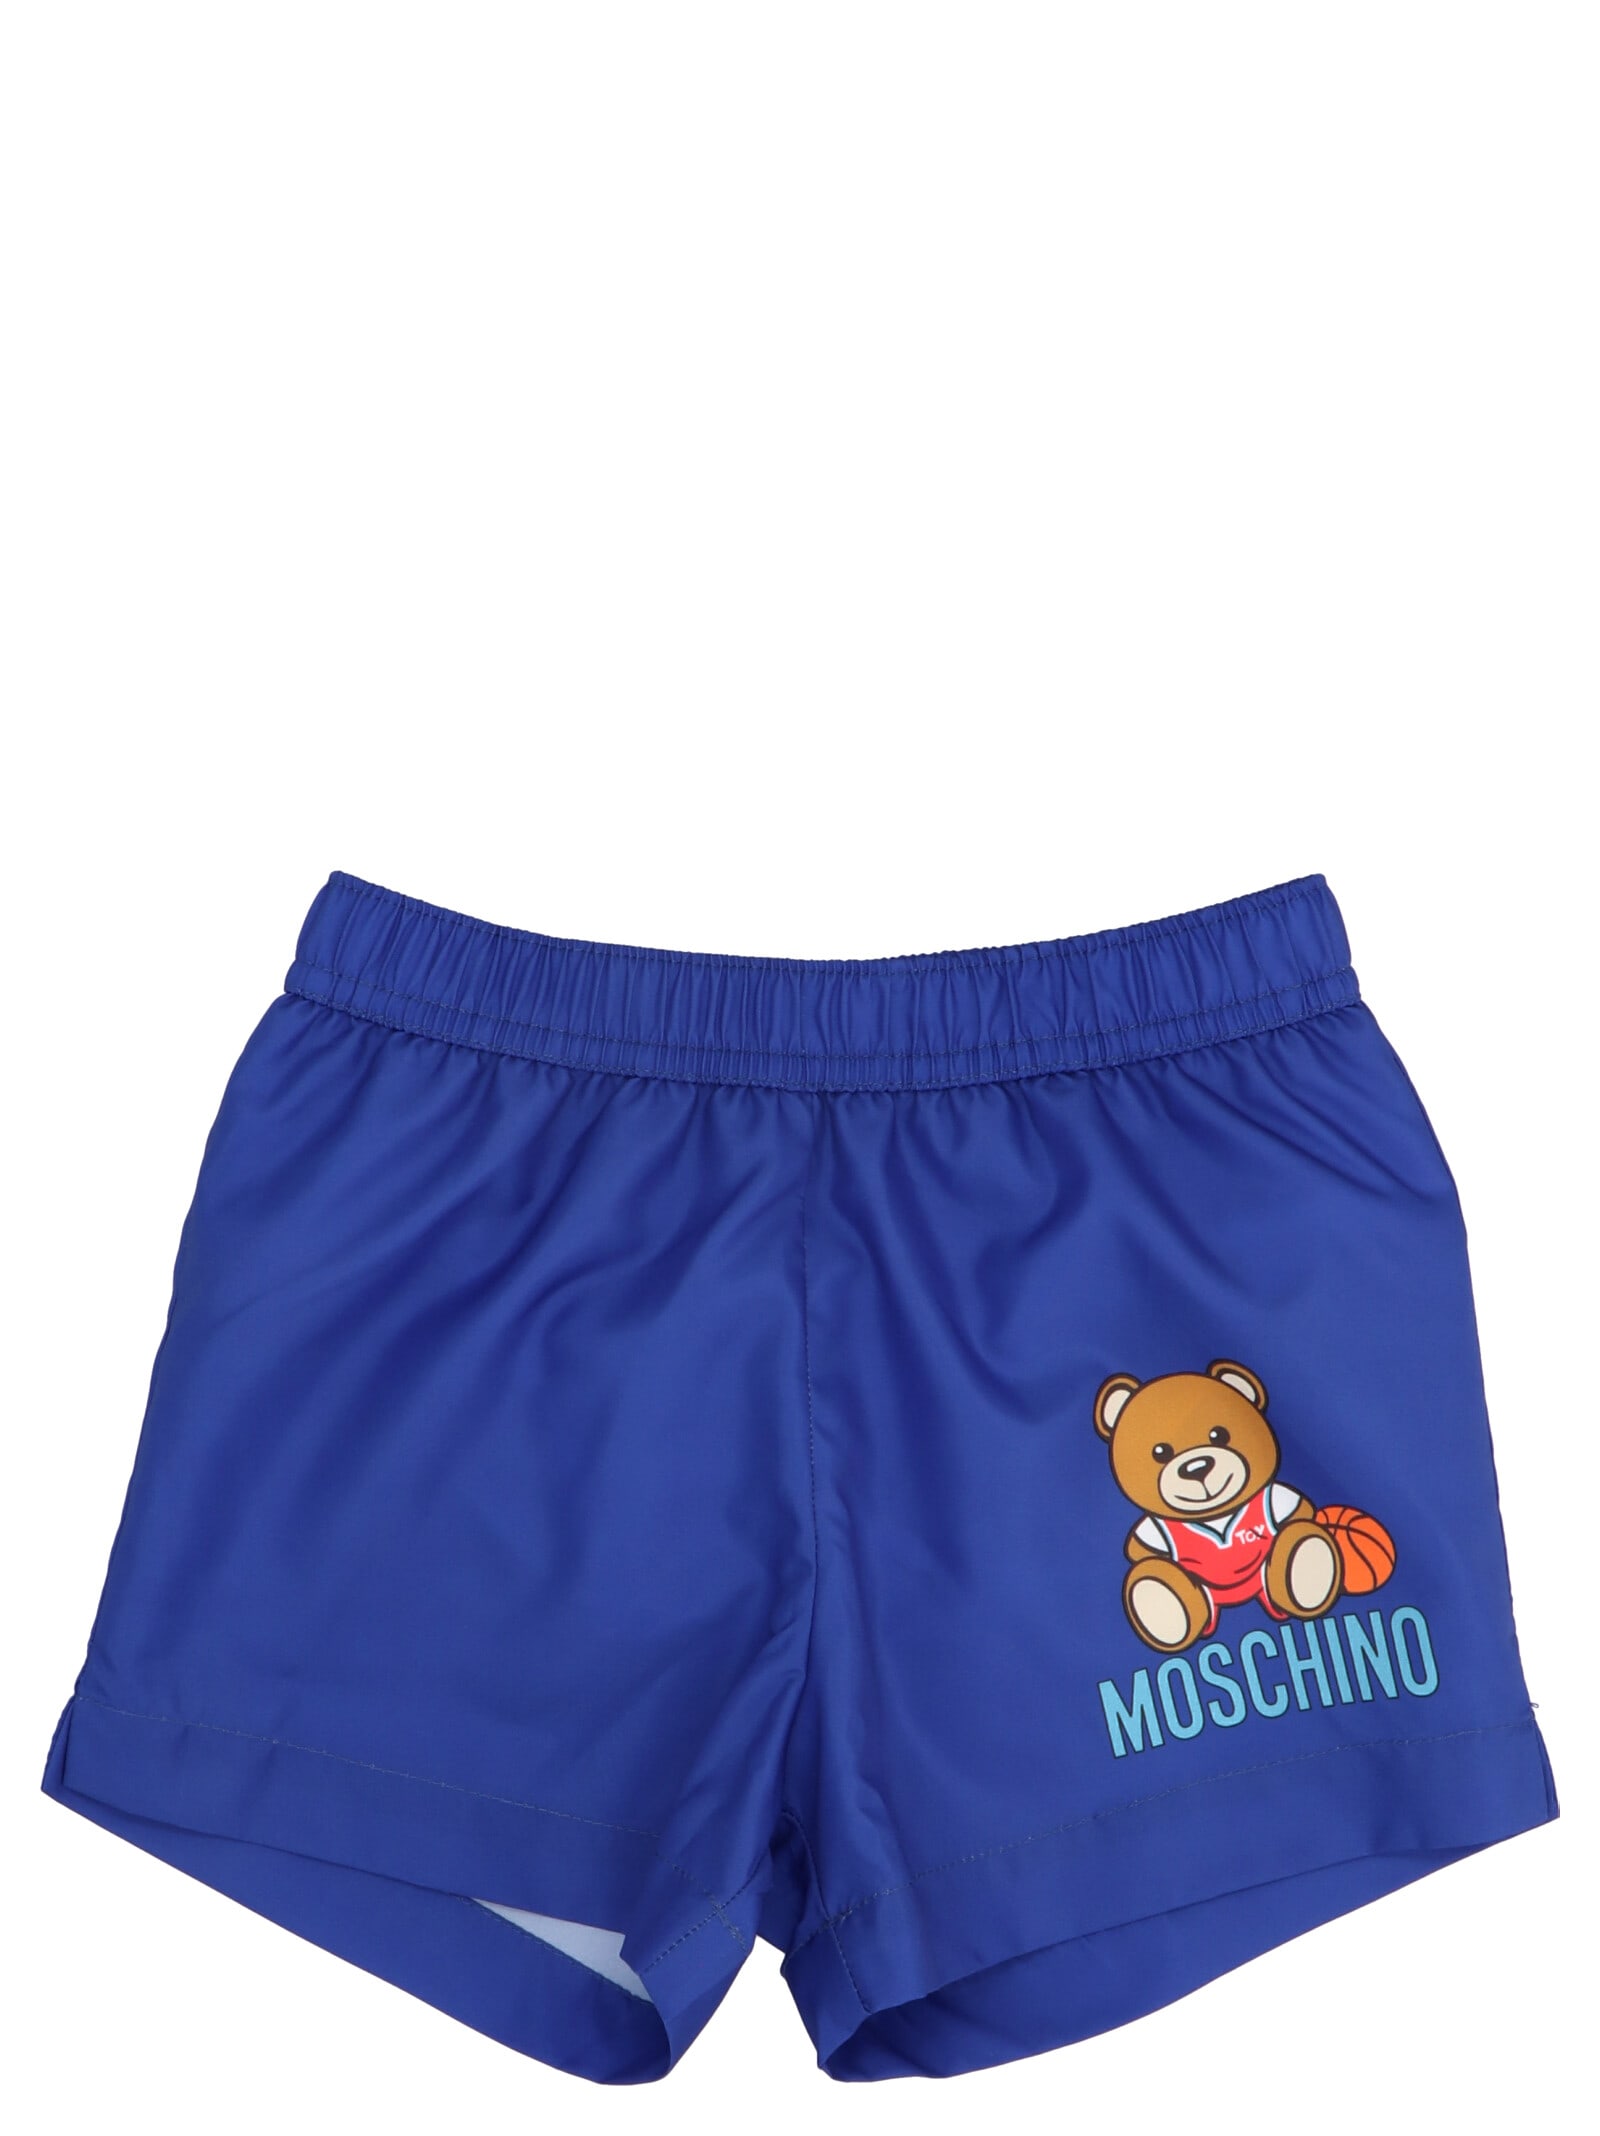 Moschino Logo Printed Swimming Shorts